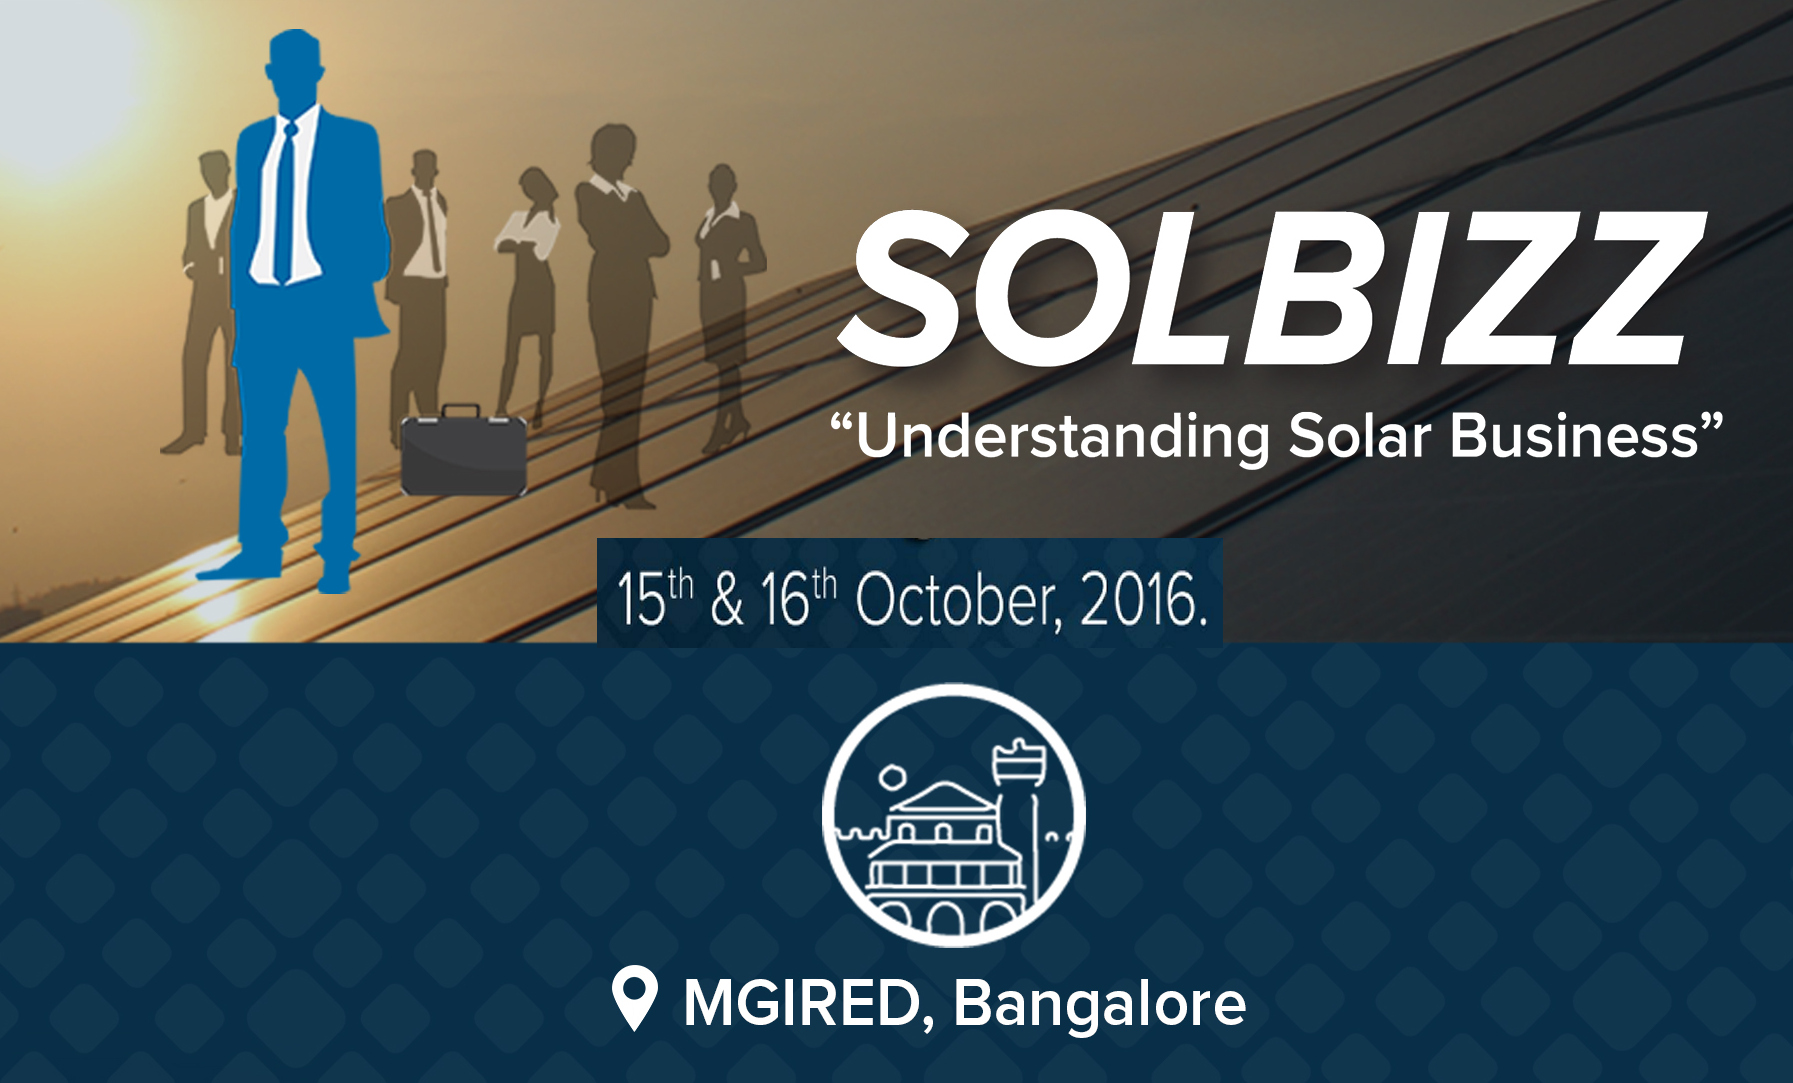 SOLBIZZ  "Understanding Solar Business", Bangalore, Karnataka, India